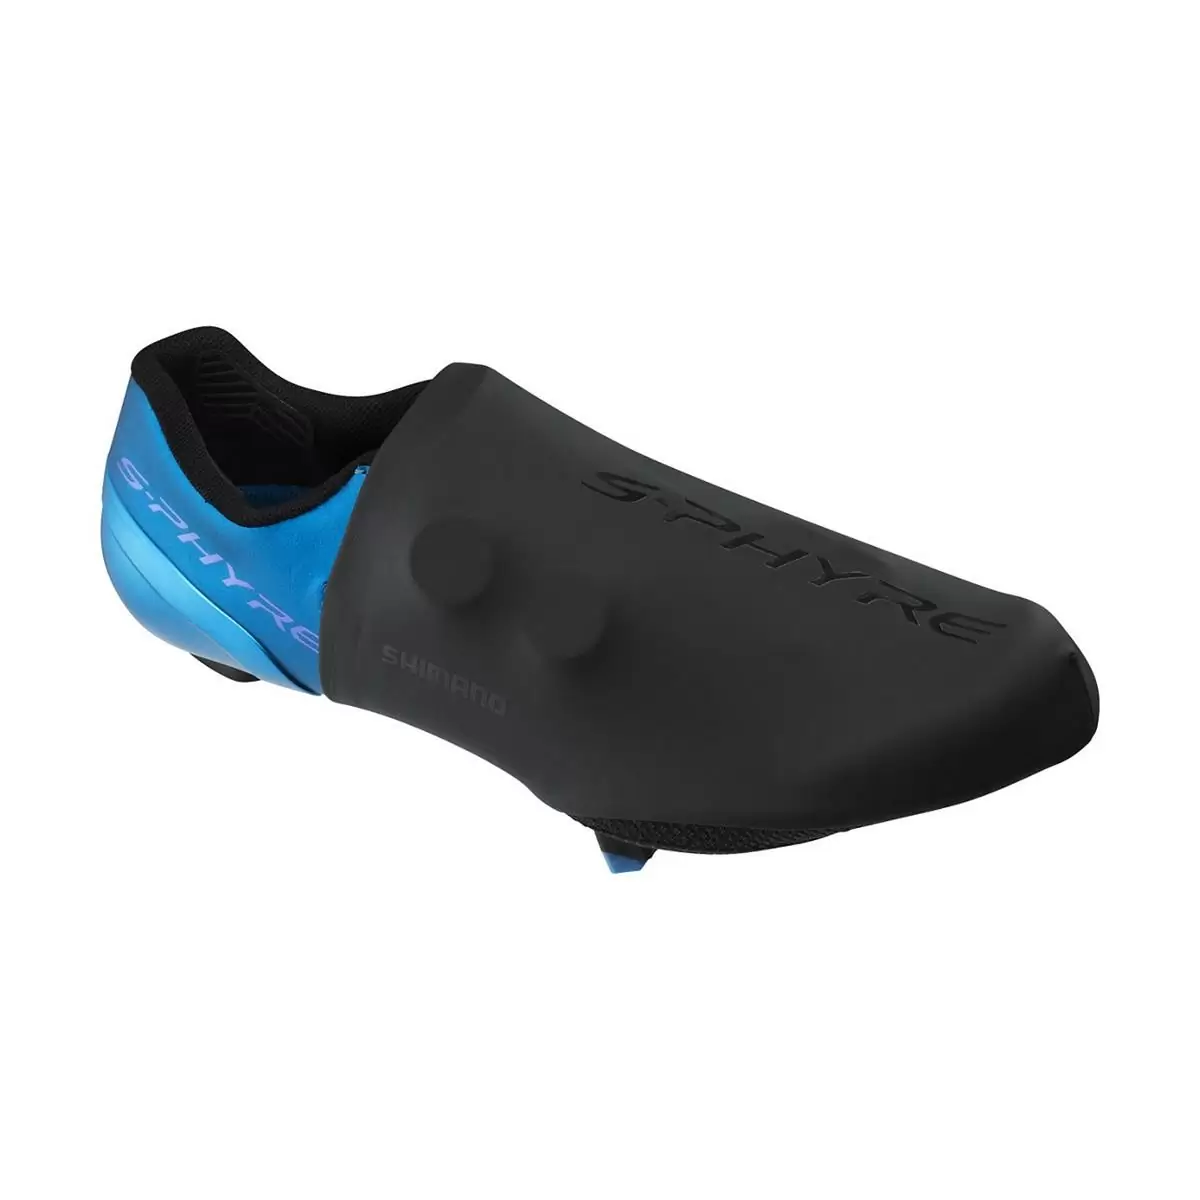 Pair waterproof shoe cover S-Phyre black size L (42-44) - image